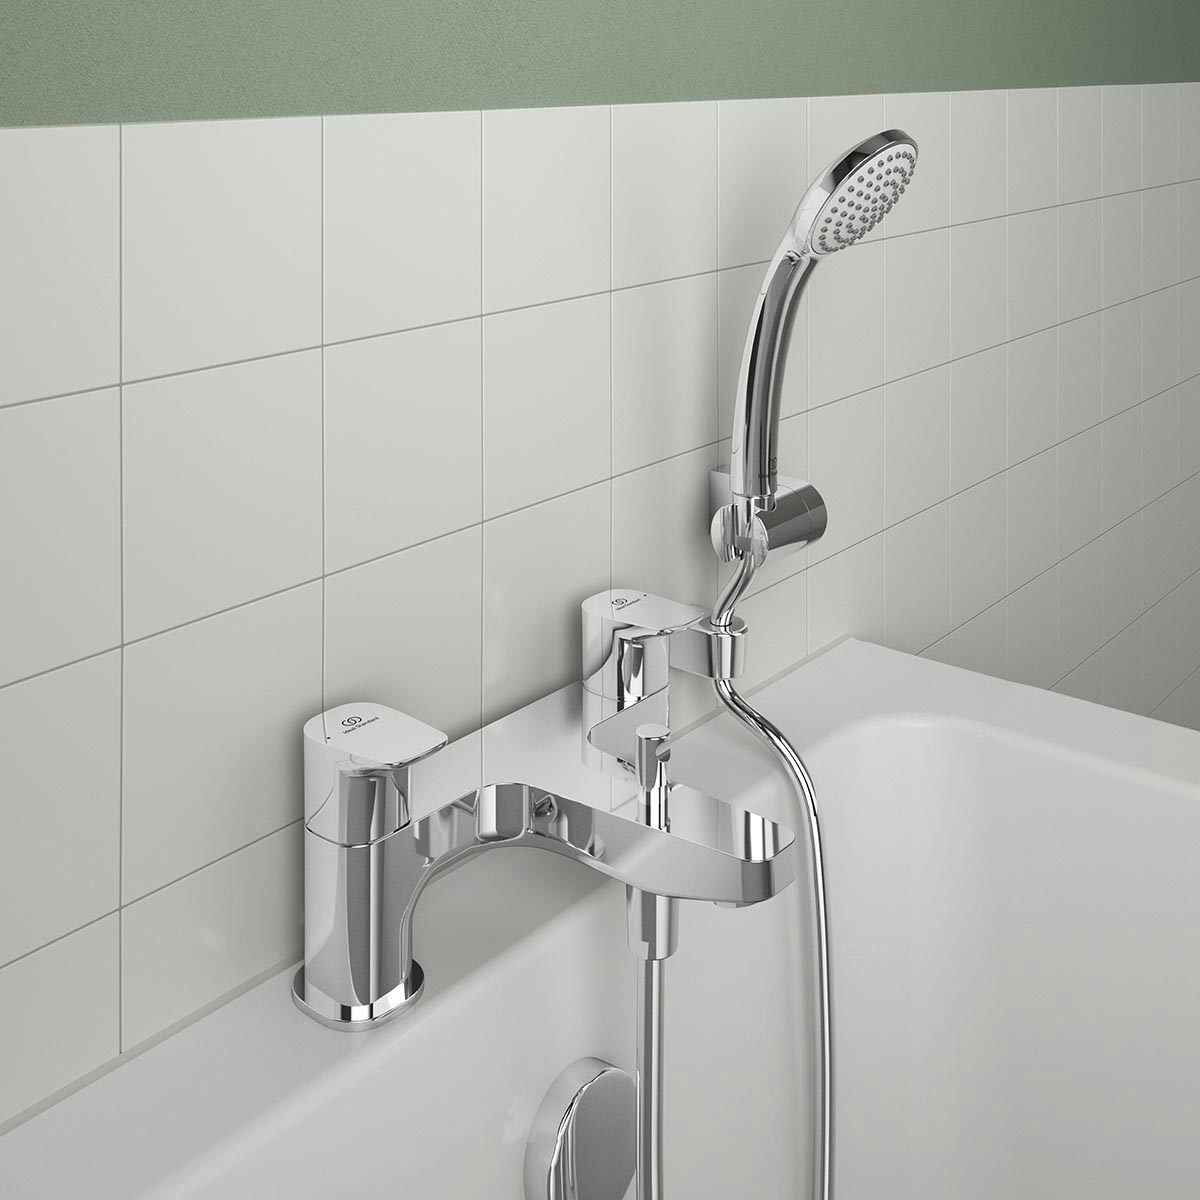 Ideal Standard Ceraplan dual control bath shower mixer tap with shower set